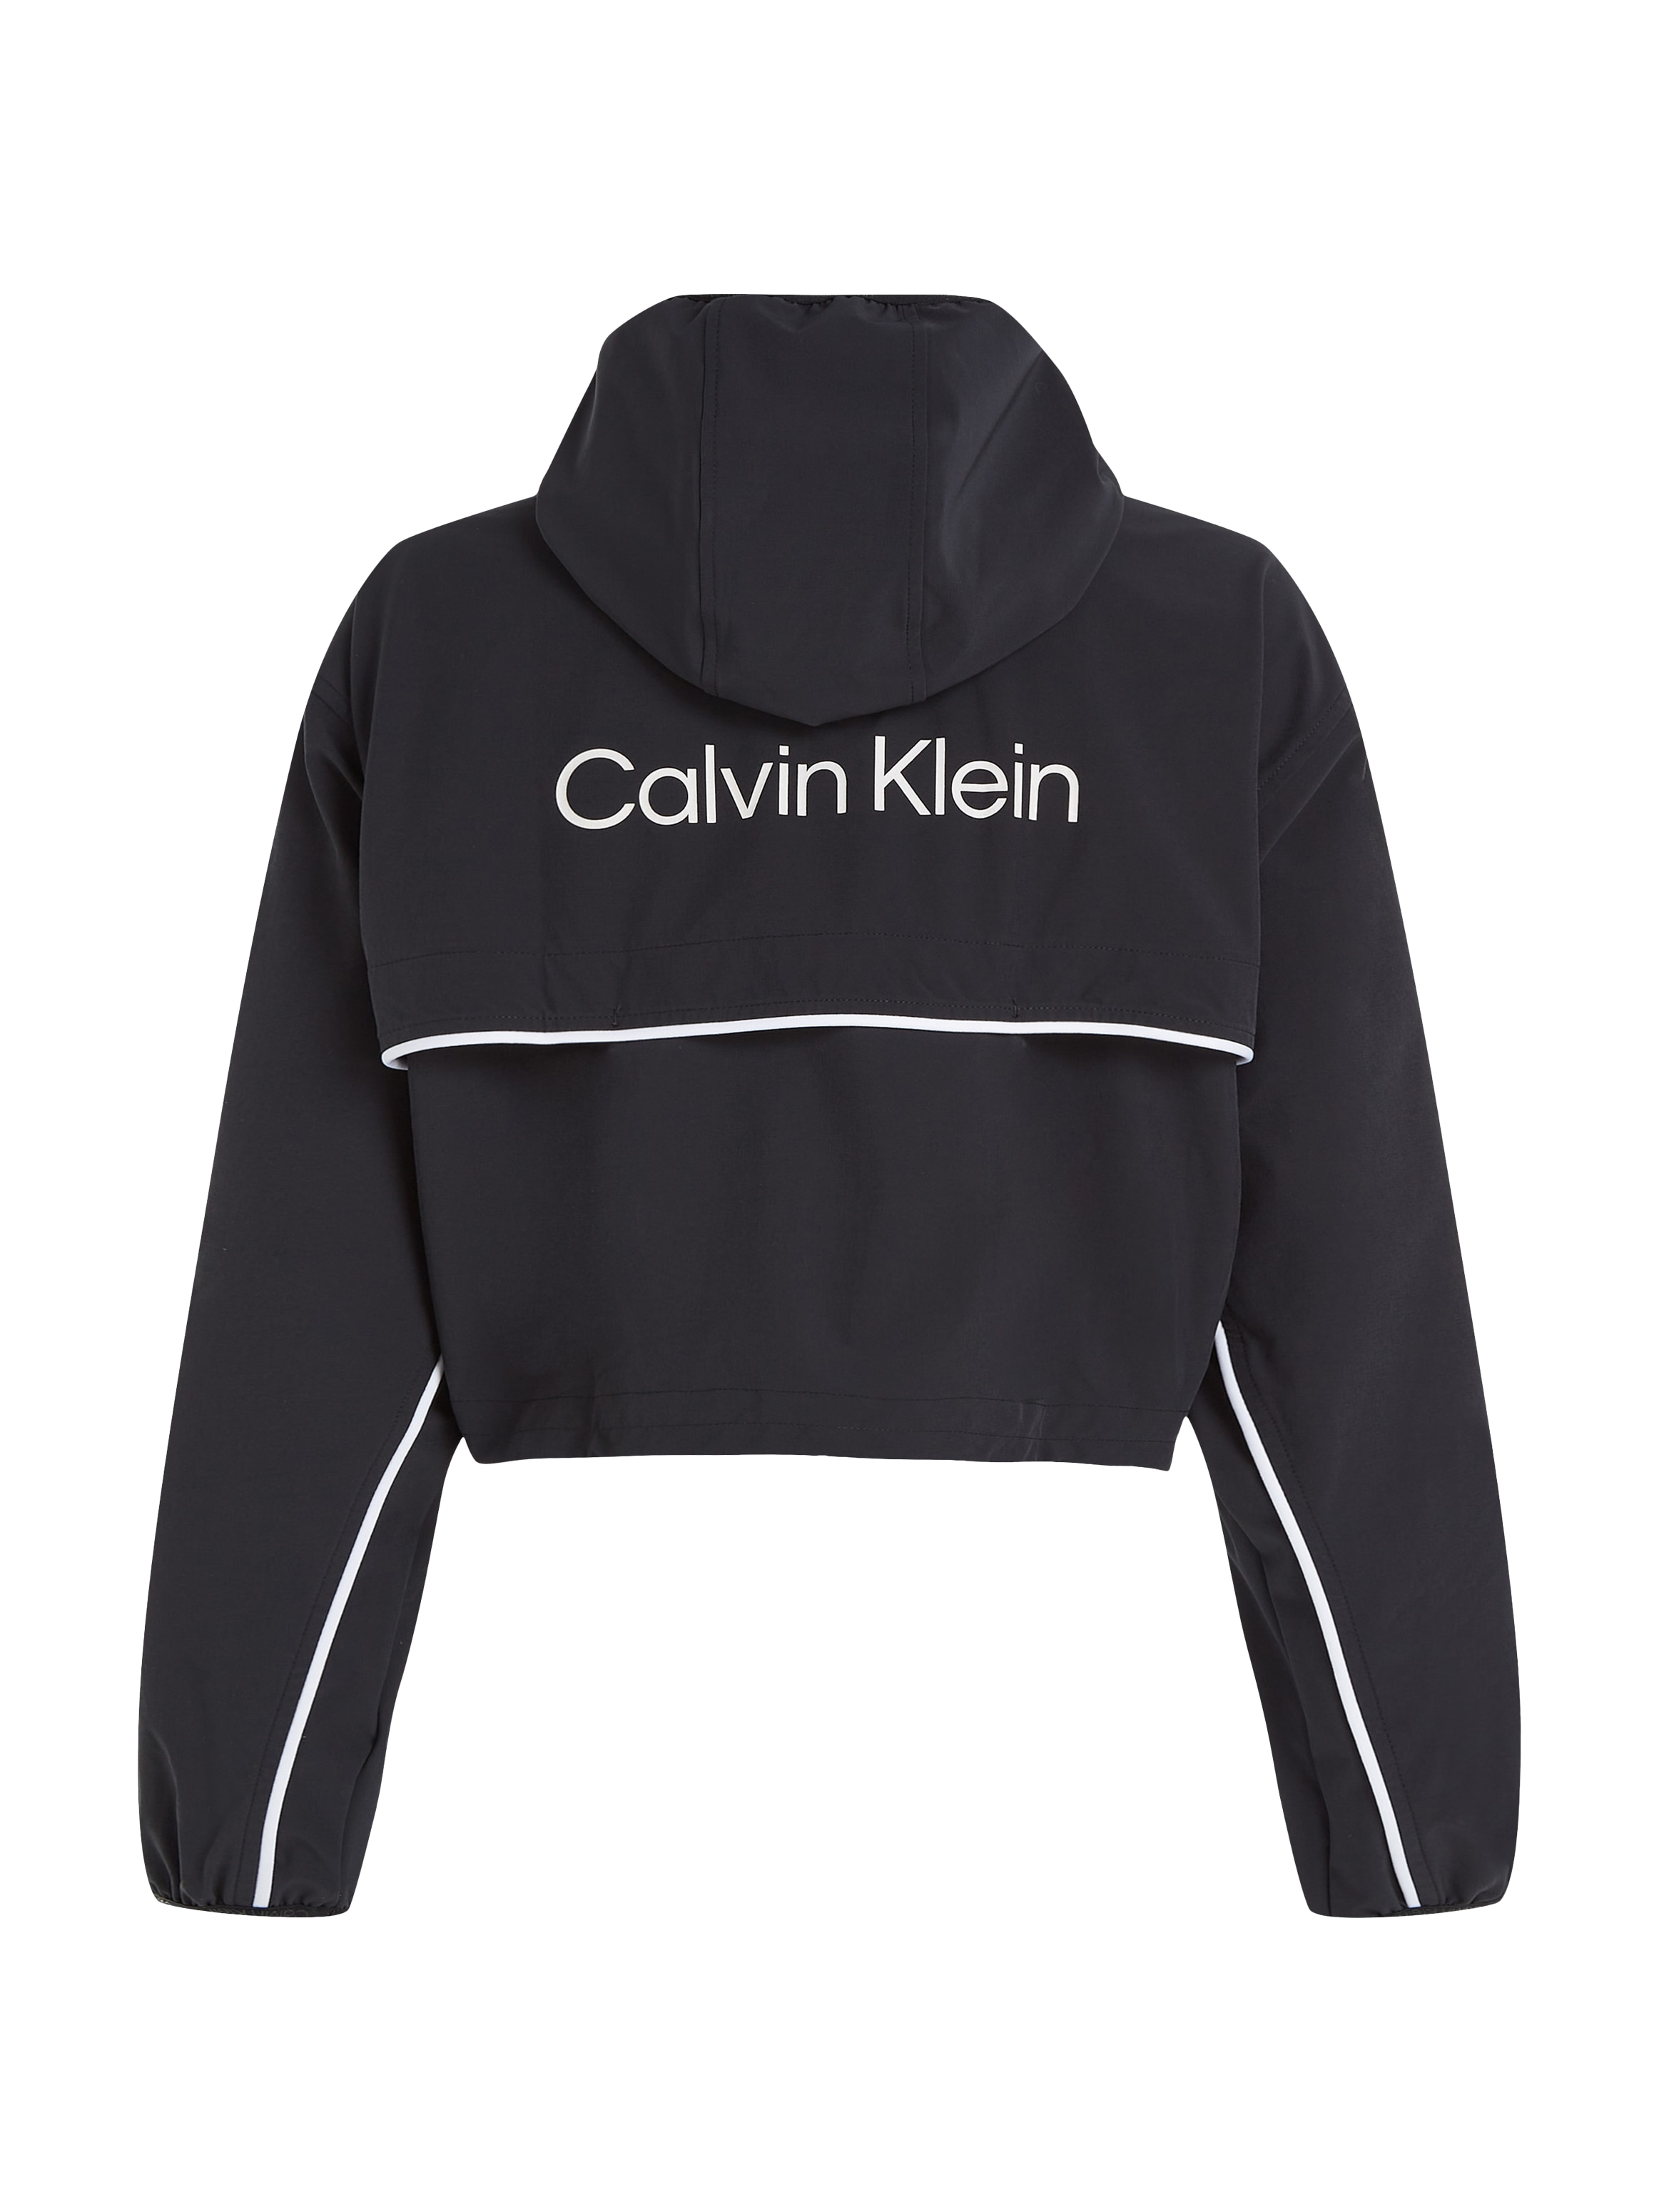 Calvin Klein Sport Windbreaker »PW - Windjacket«, mit Kapuze bei ♕